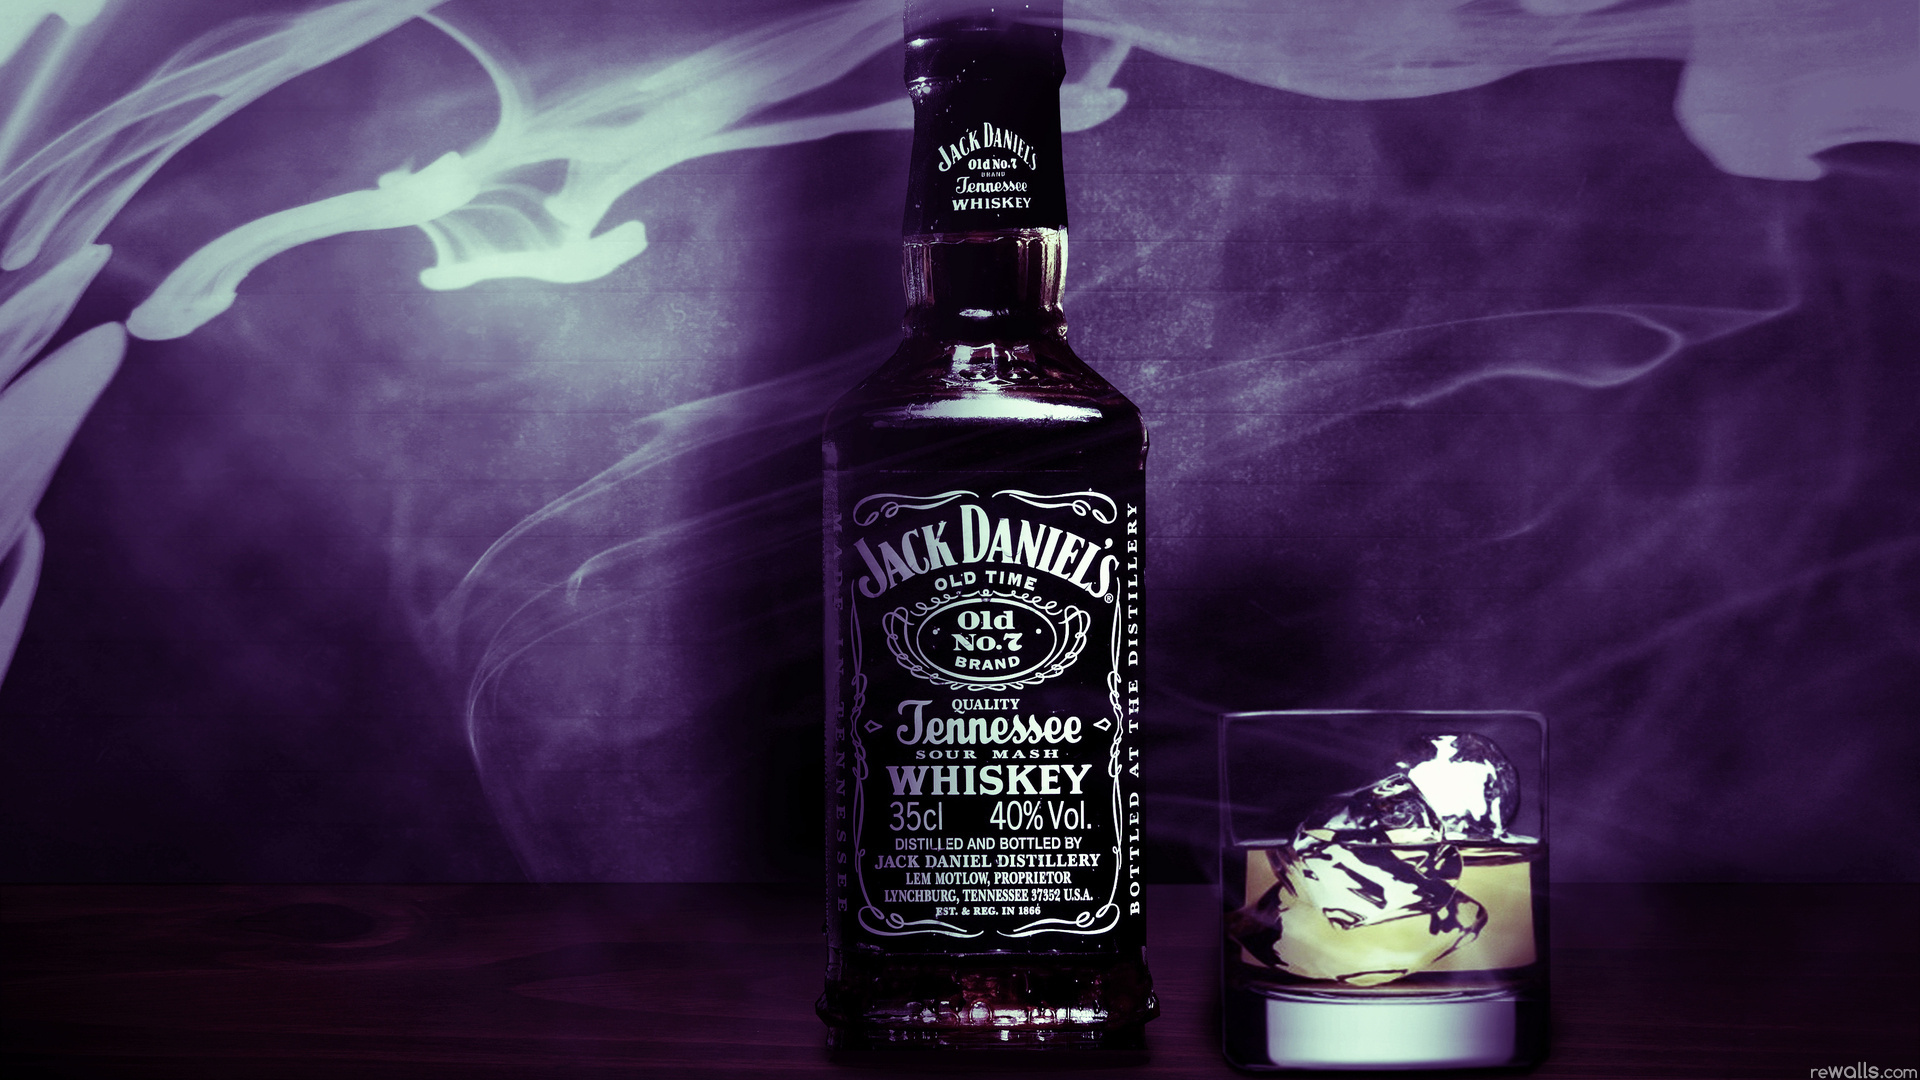 Wallpaper Del Whiskey Jack Daniels